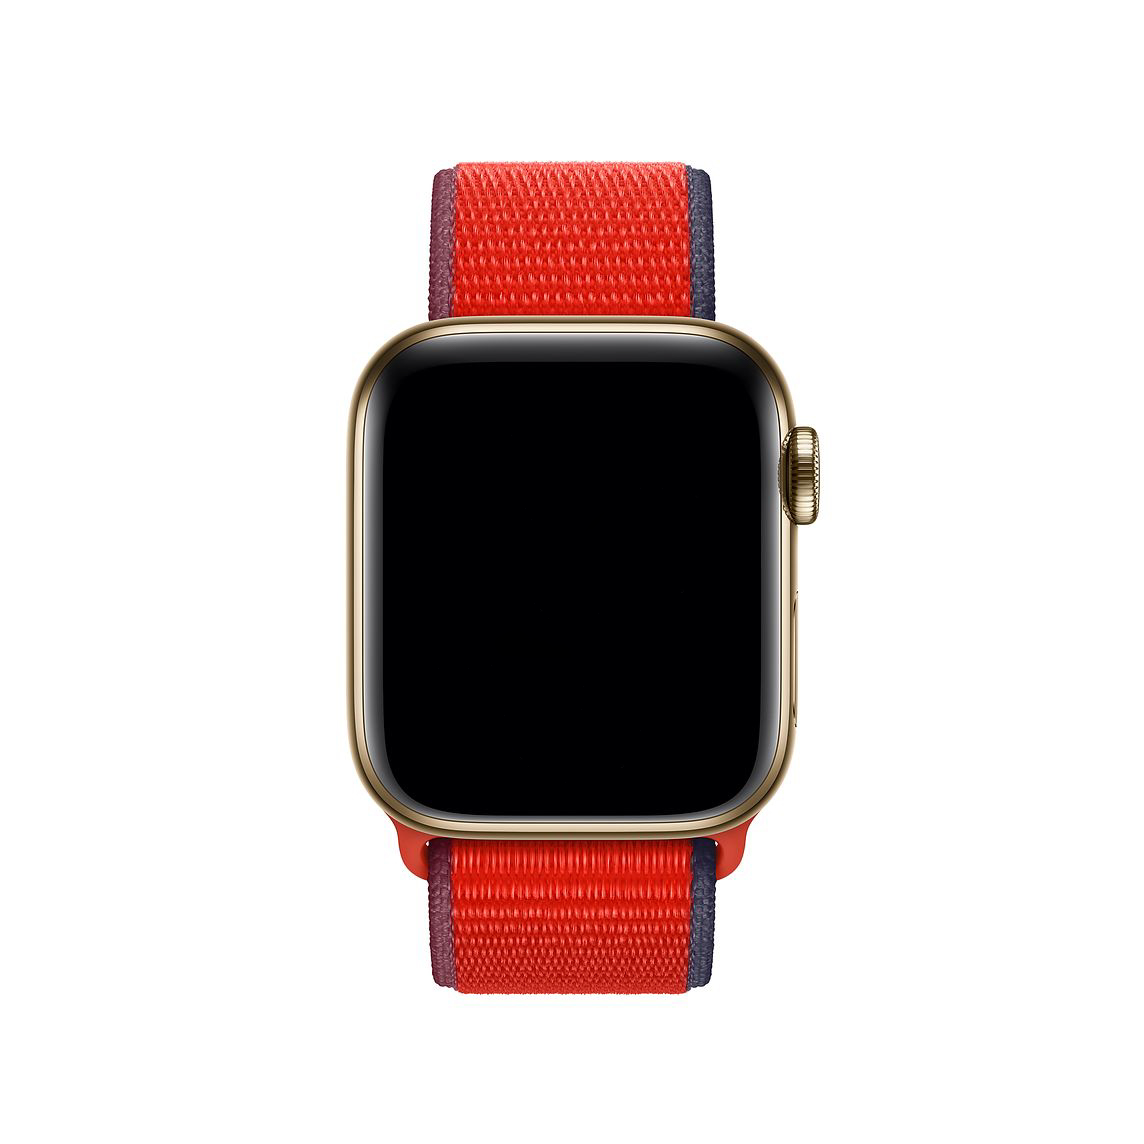 Cinturino nylon sport loop per Apple Watch - rosso tricolore